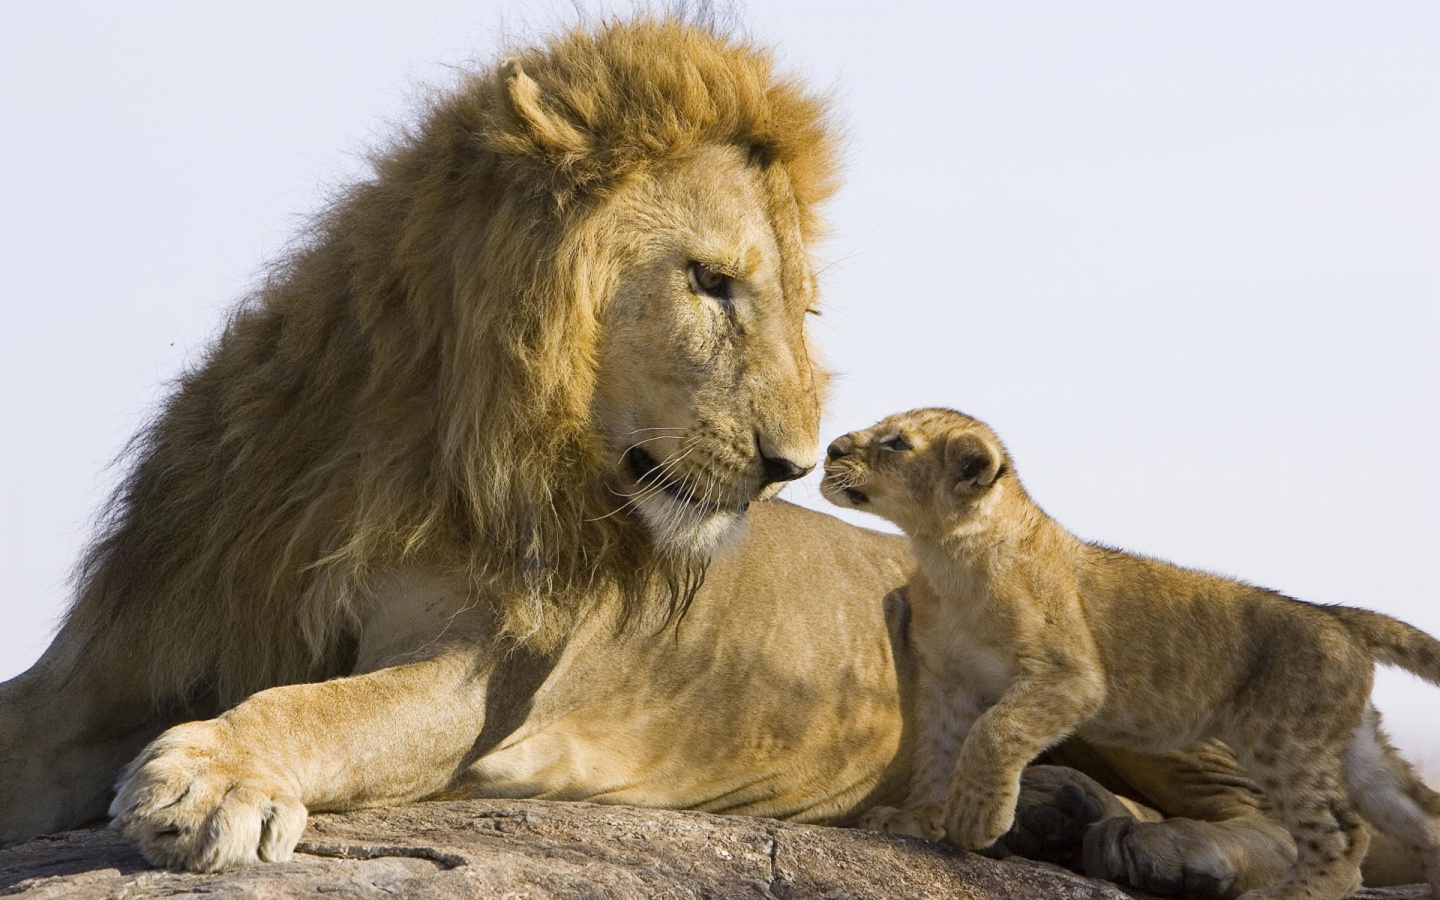 Big Lion & baby Lion